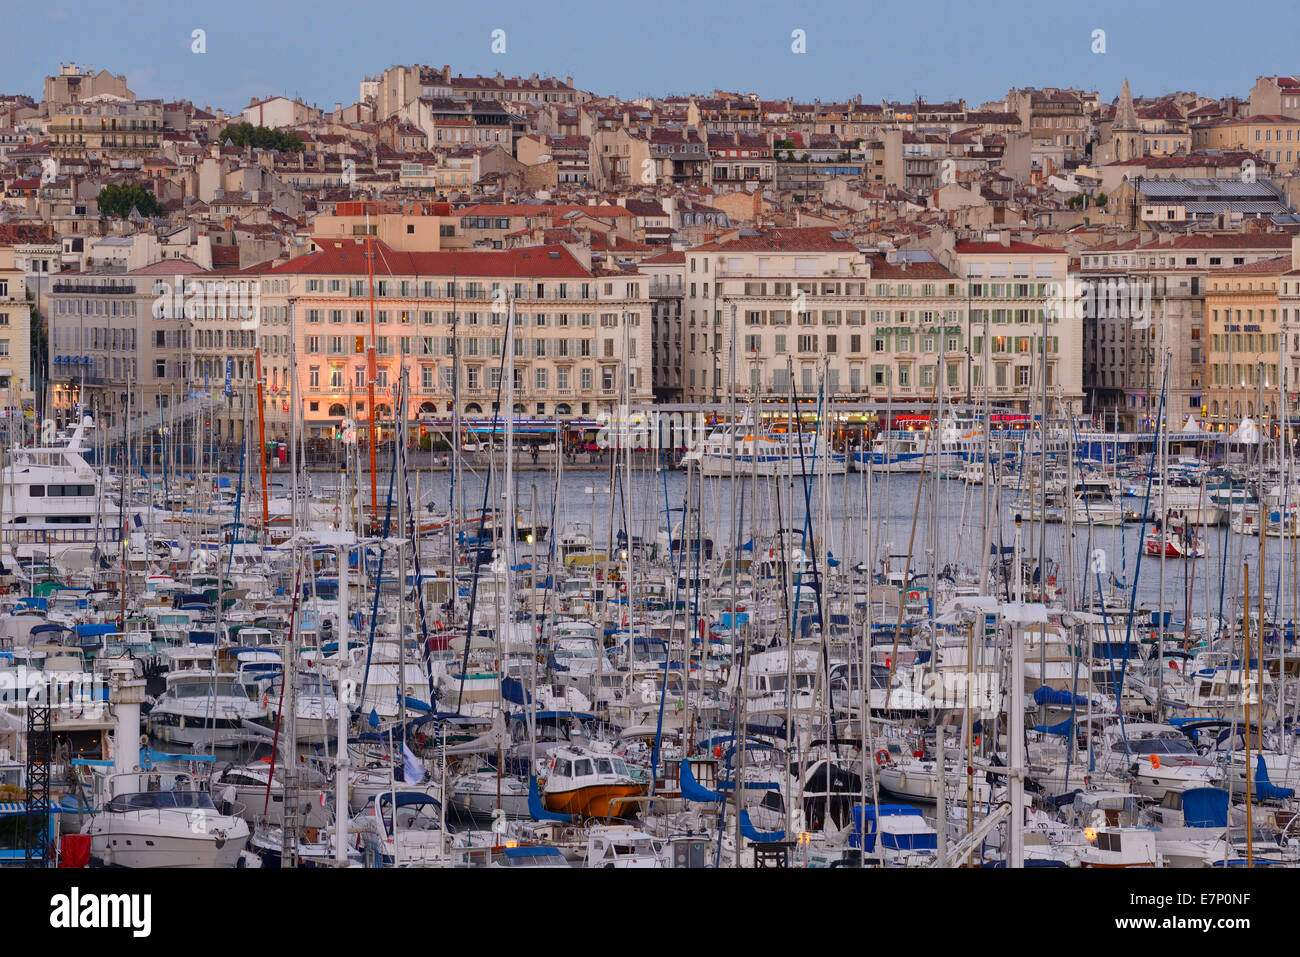 Europe, France, Provence-Alpes-Côte d'Azur, Provence, Marseille, old port, boats, city, evening, Stock Photo